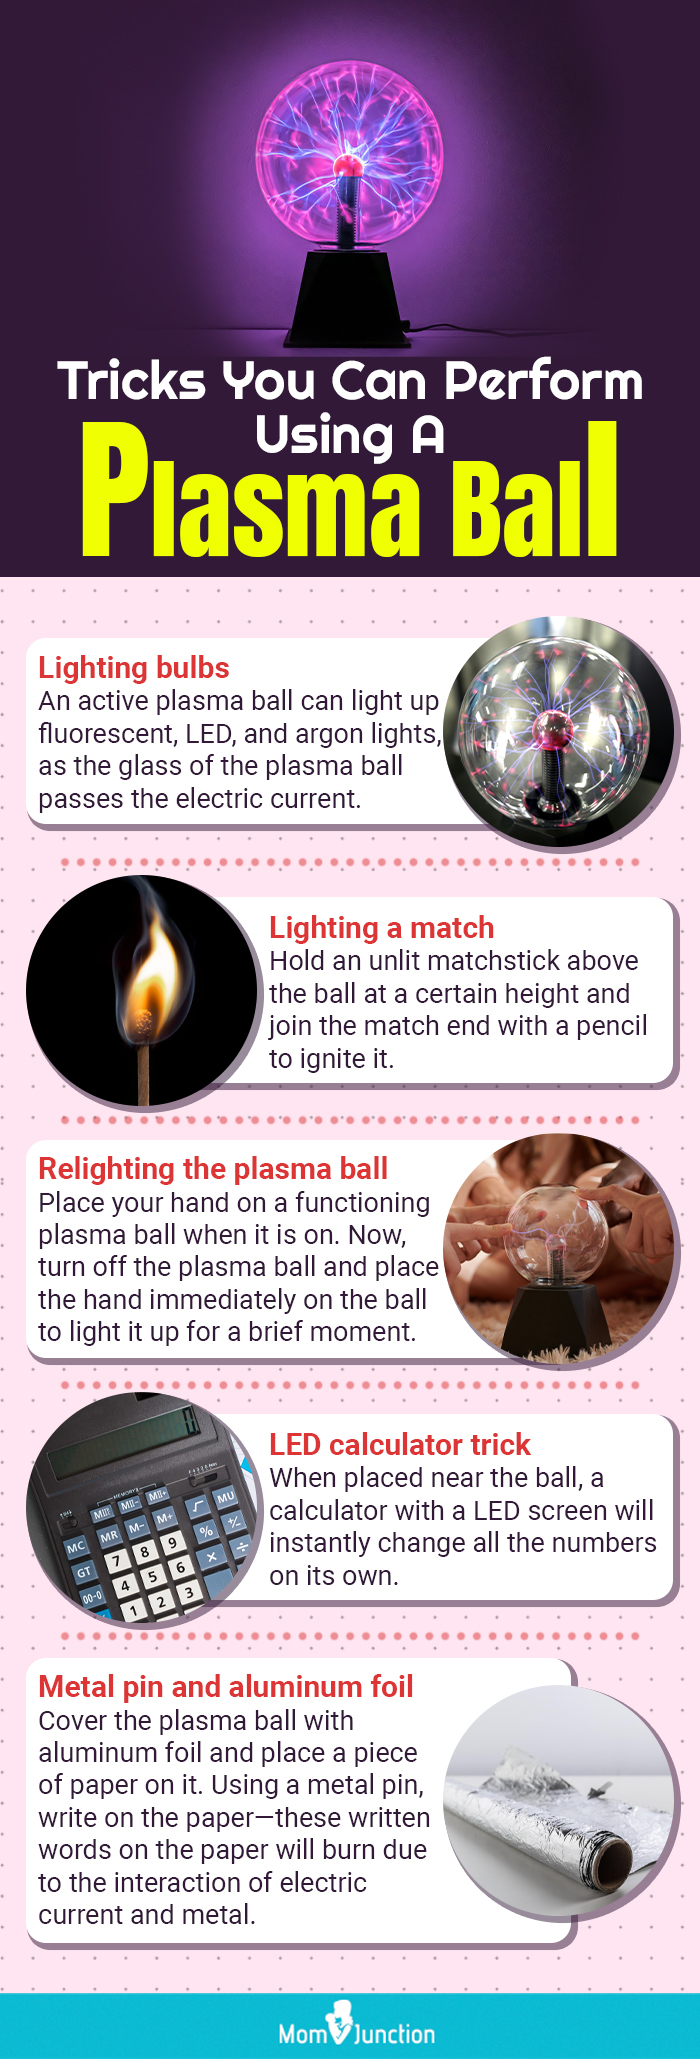 Tricks You Can Perform Using A Plasma Ball